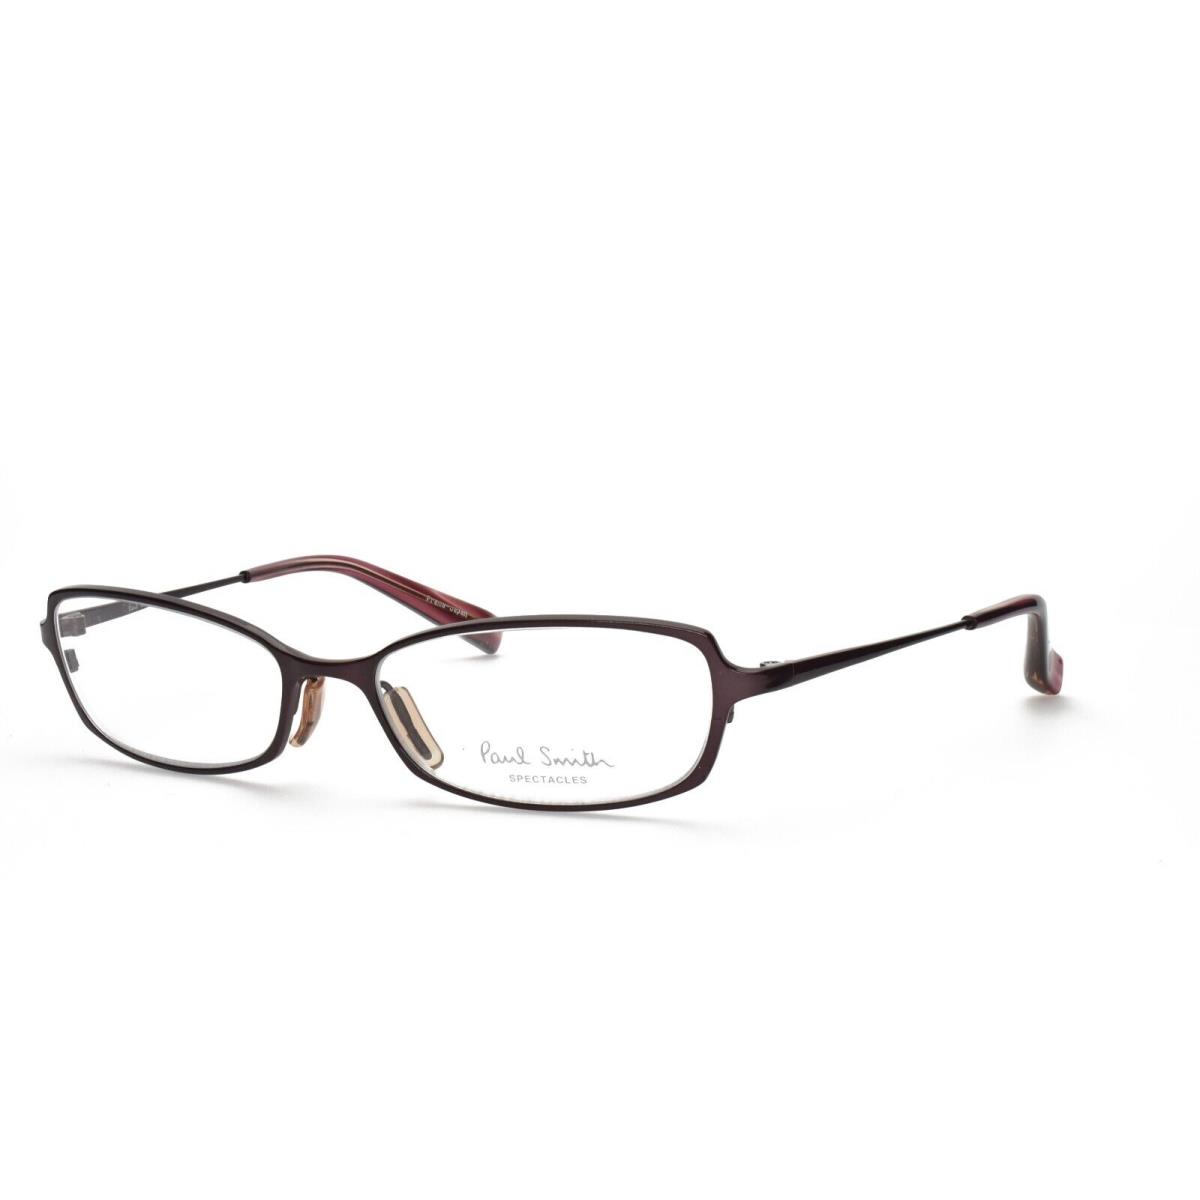 Paul Smith 188 PL 51-16-130 Burgundy Vtg Vintage Eyeglasses Frames Titanium